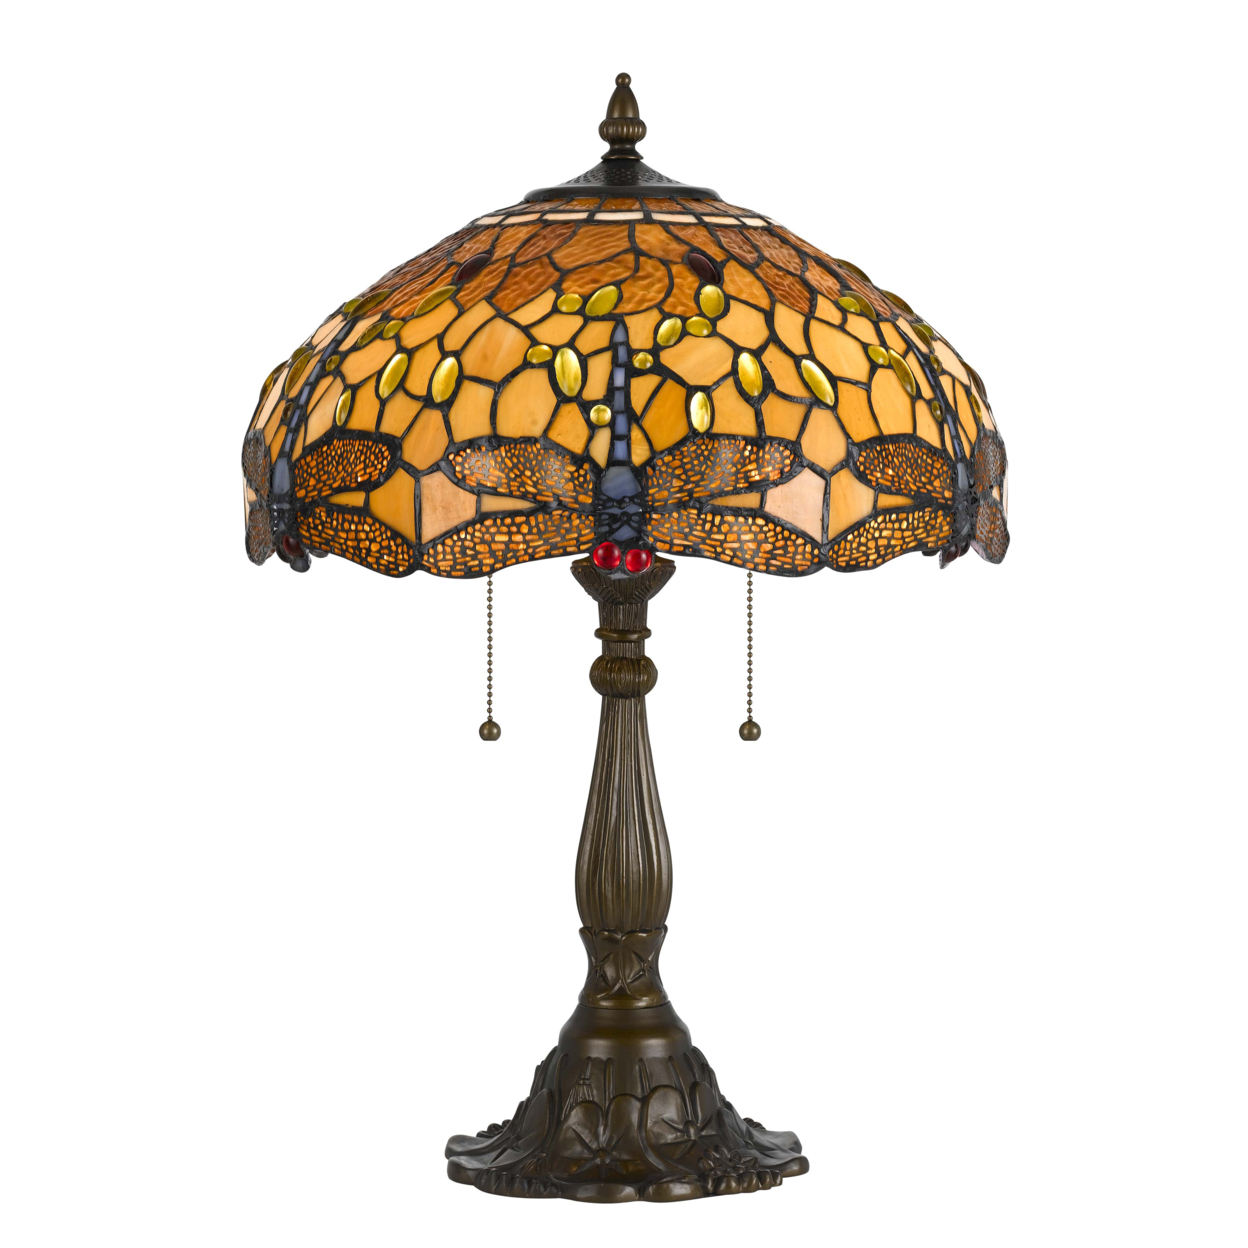 2 Bulb Tiffany Table Lamp With Dragonfly Design Shade, Multicolor- Saltoro Sherpi